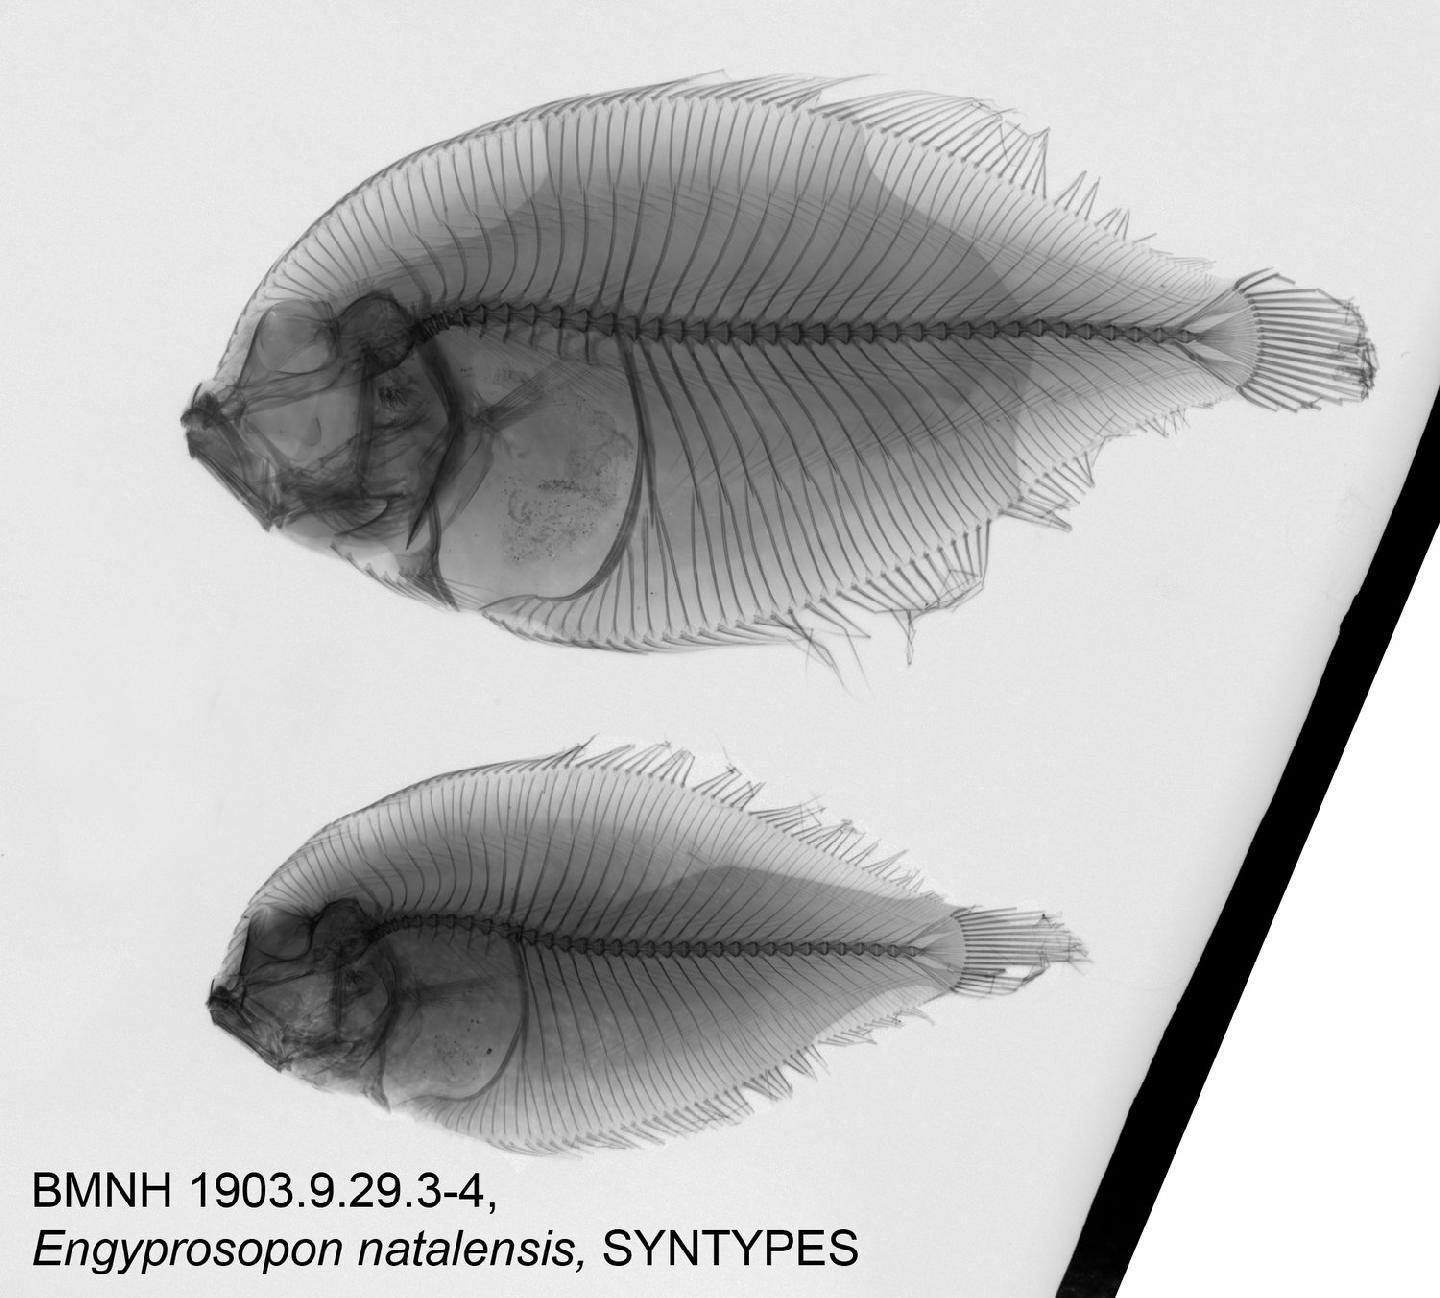 To NHMUK collection (Engyprosopon natalensis Regan, 1920; SYNTYPE(S); NHMUK:ecatalogue:3125435)